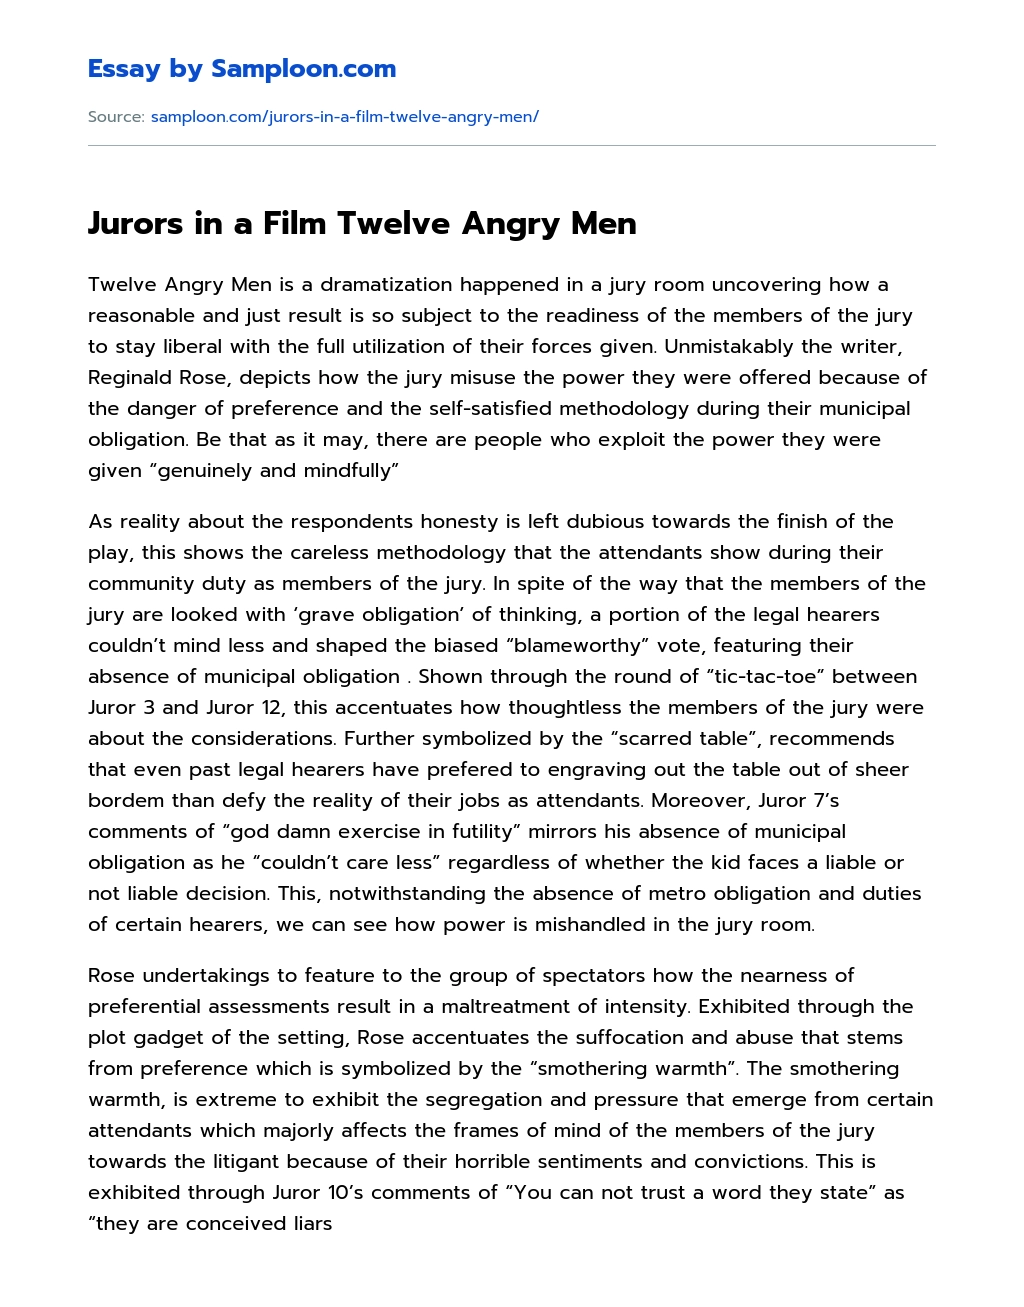 Jurors in a Film Twelve Angry Men essay